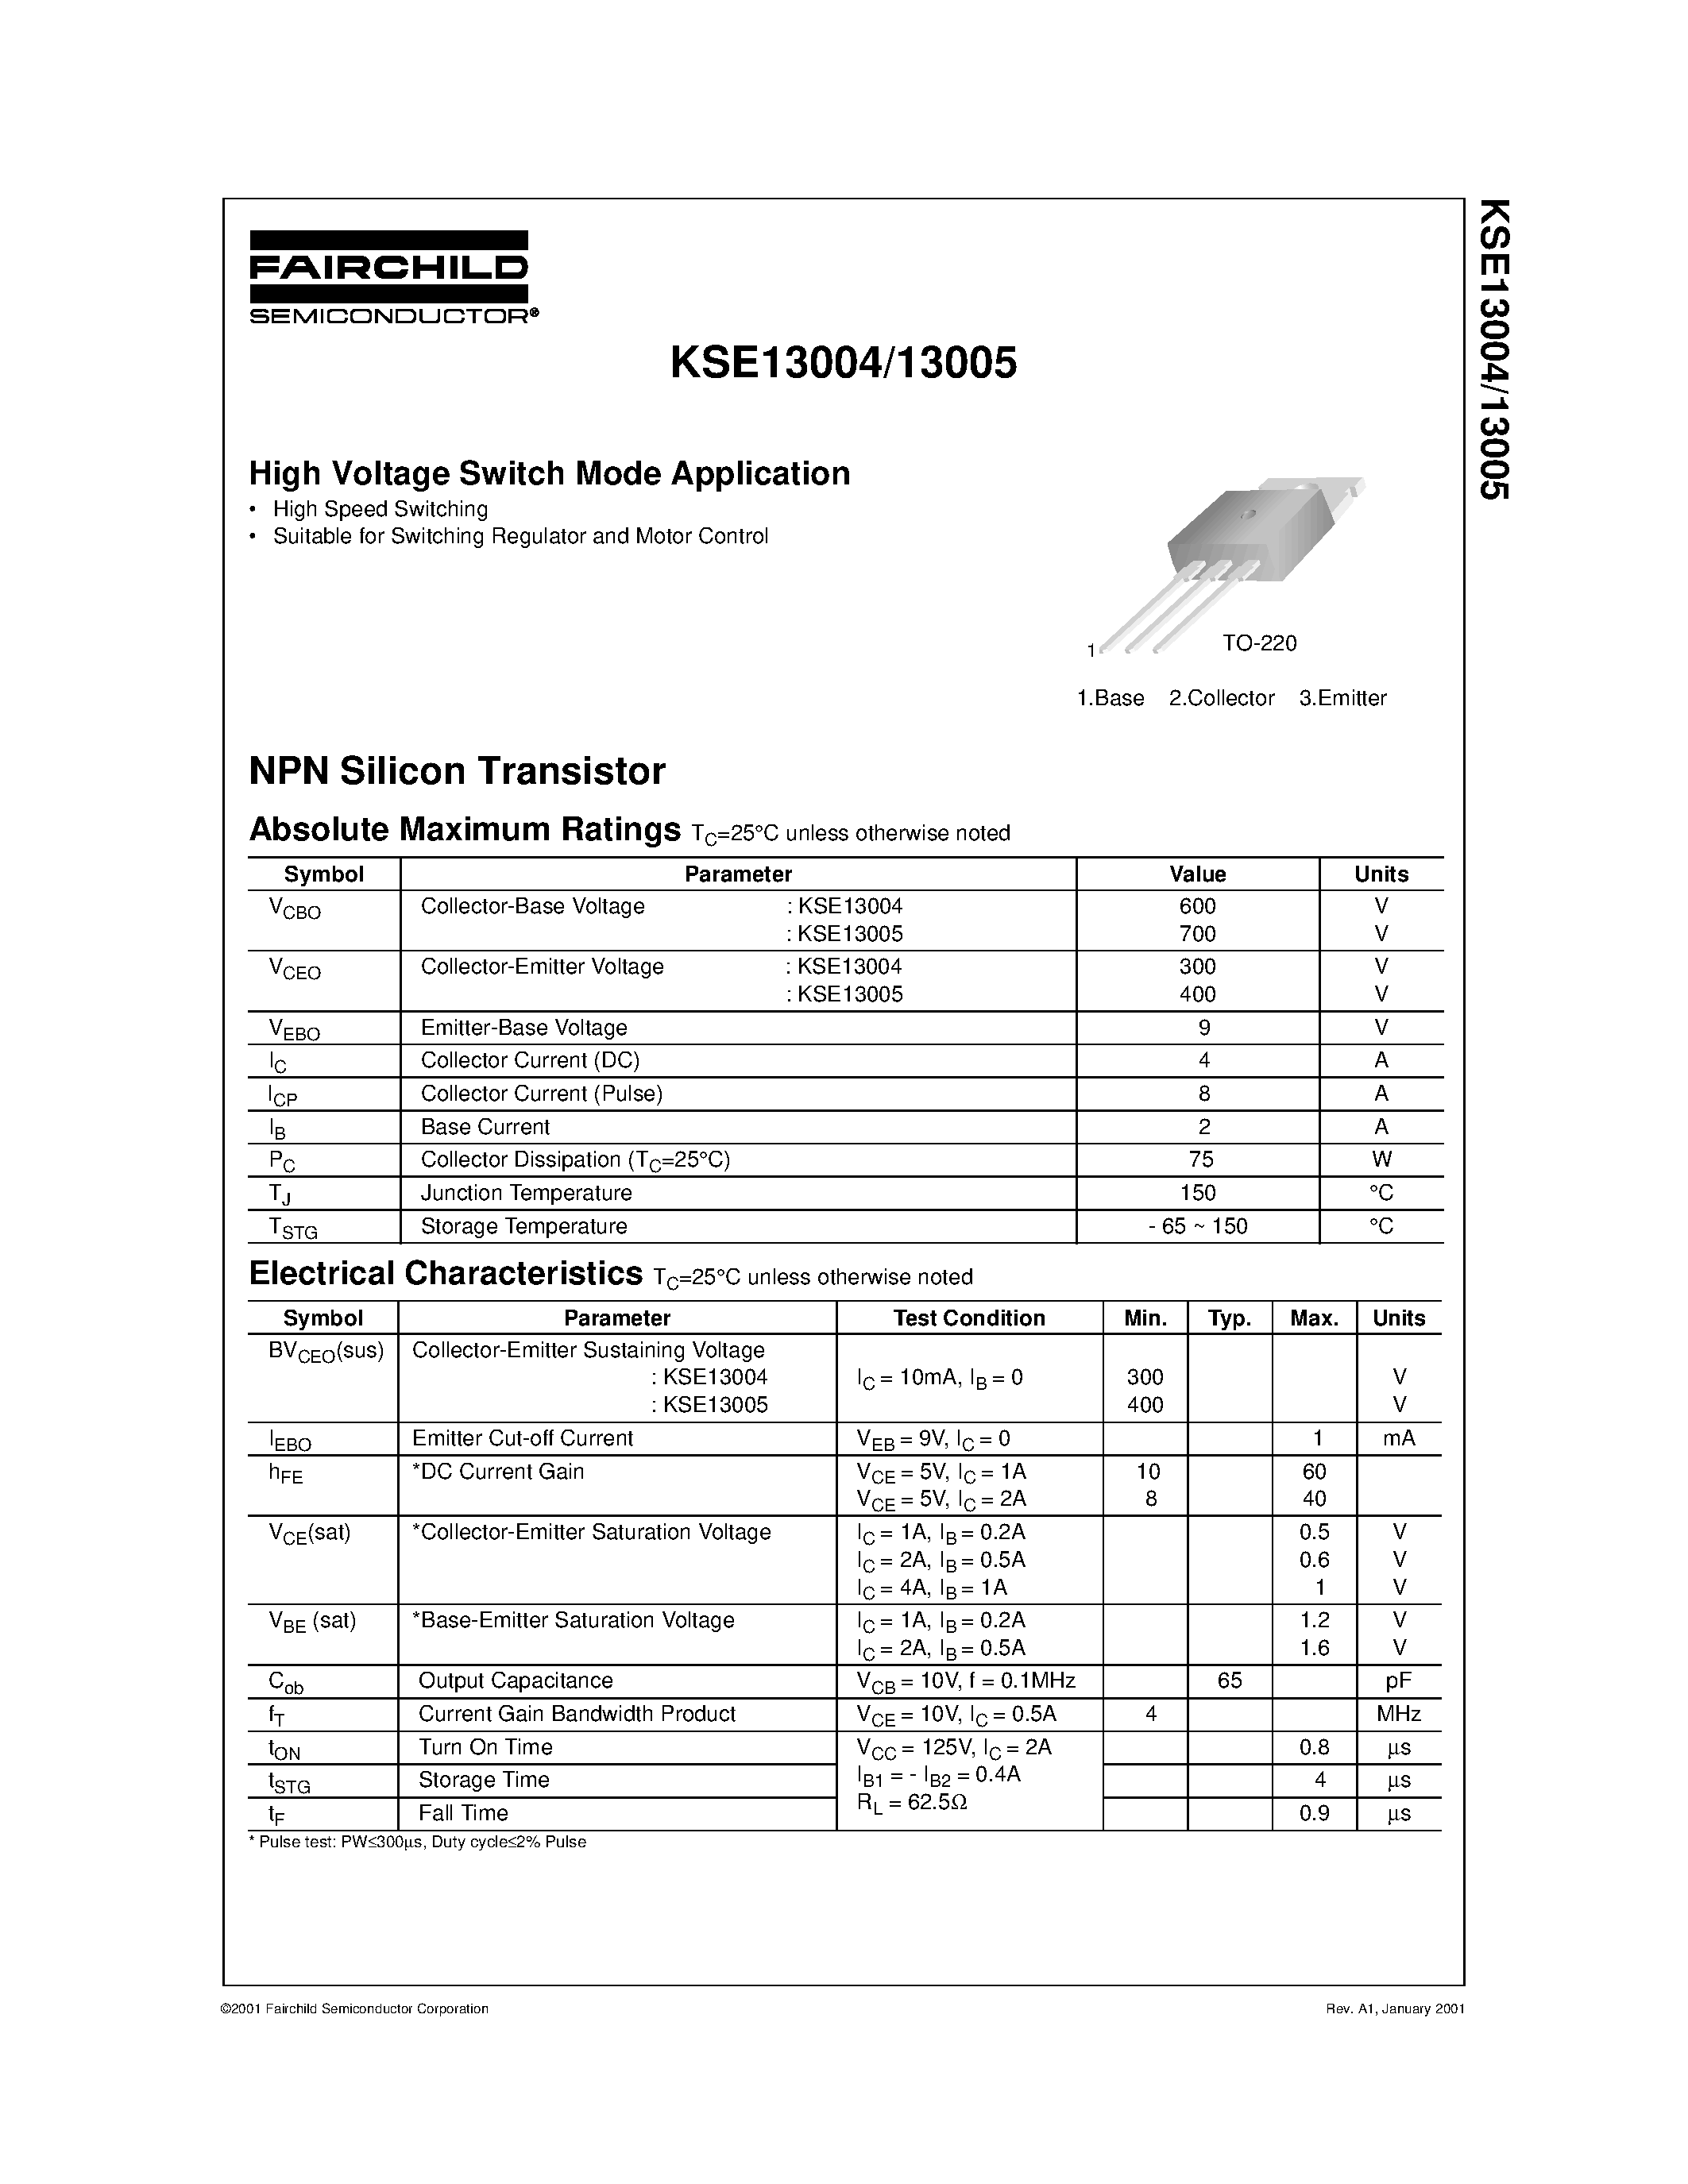 Datasheet KSE13005H2ATU - High Voltage Switch Mode Application page 1